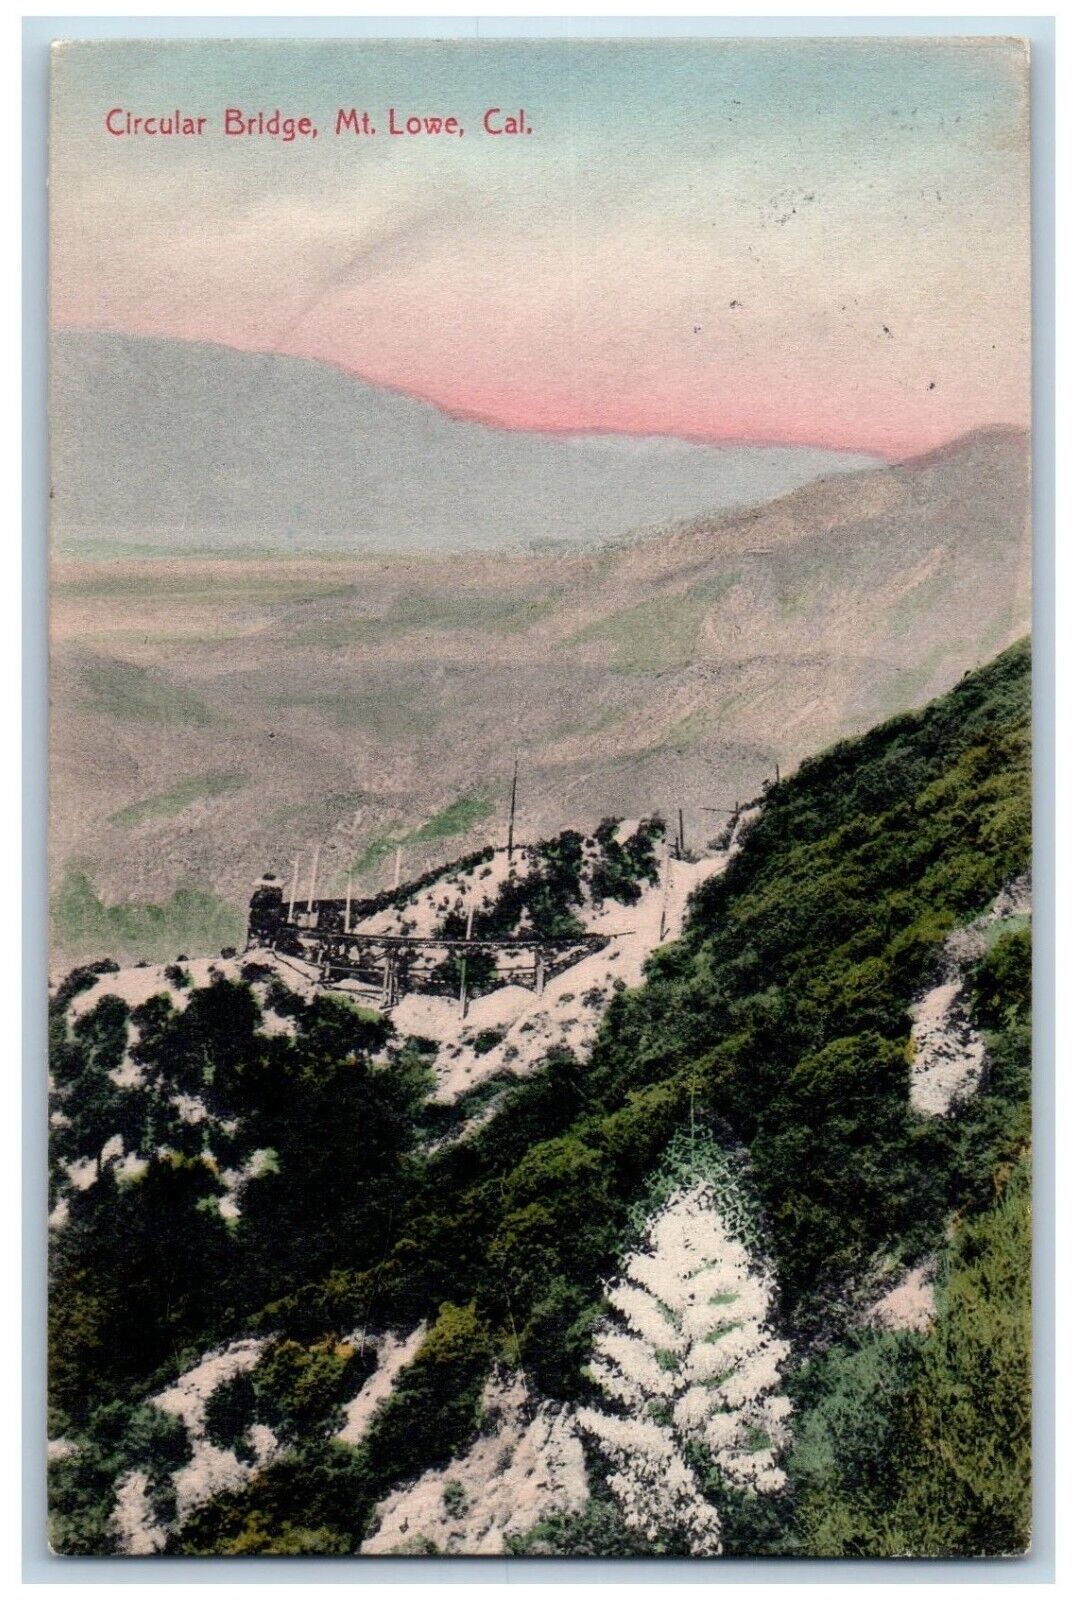 Mt. Lowe California Postcard Circular Bridge Exterior View c1907 Vintage Antique